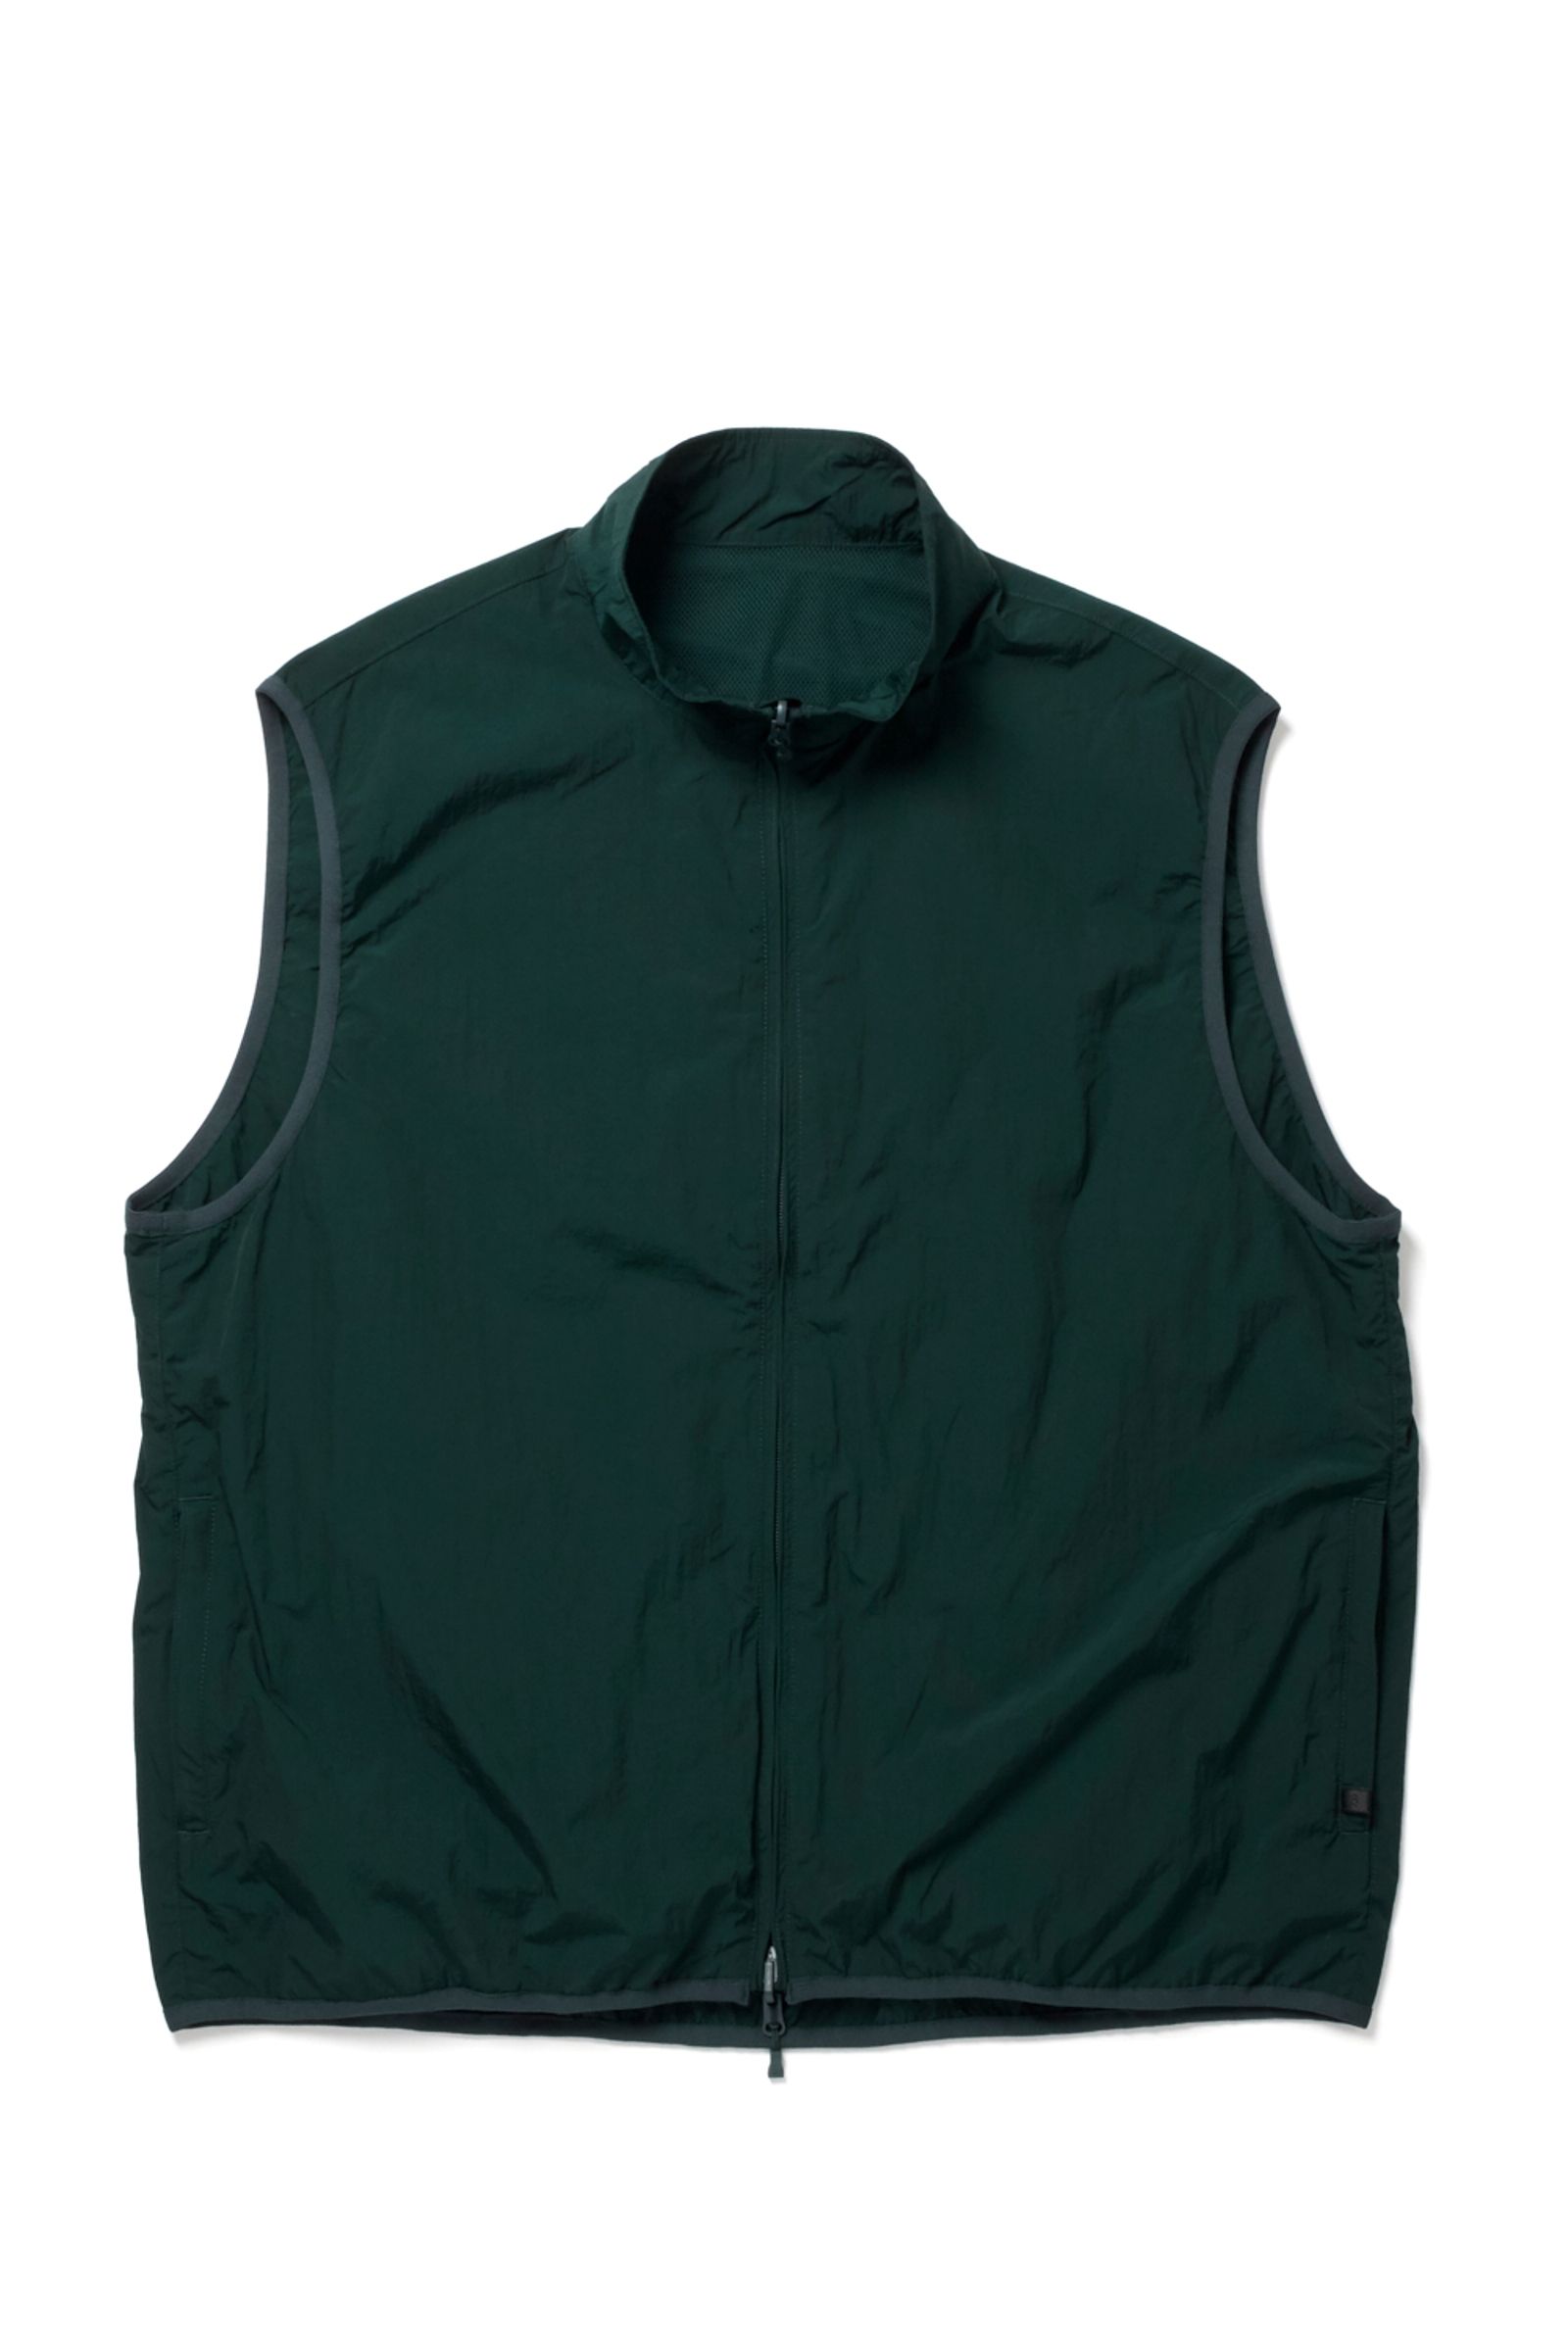 tech mil vest-dark green- 22ss 1.22発売! - L - DARK GREEN